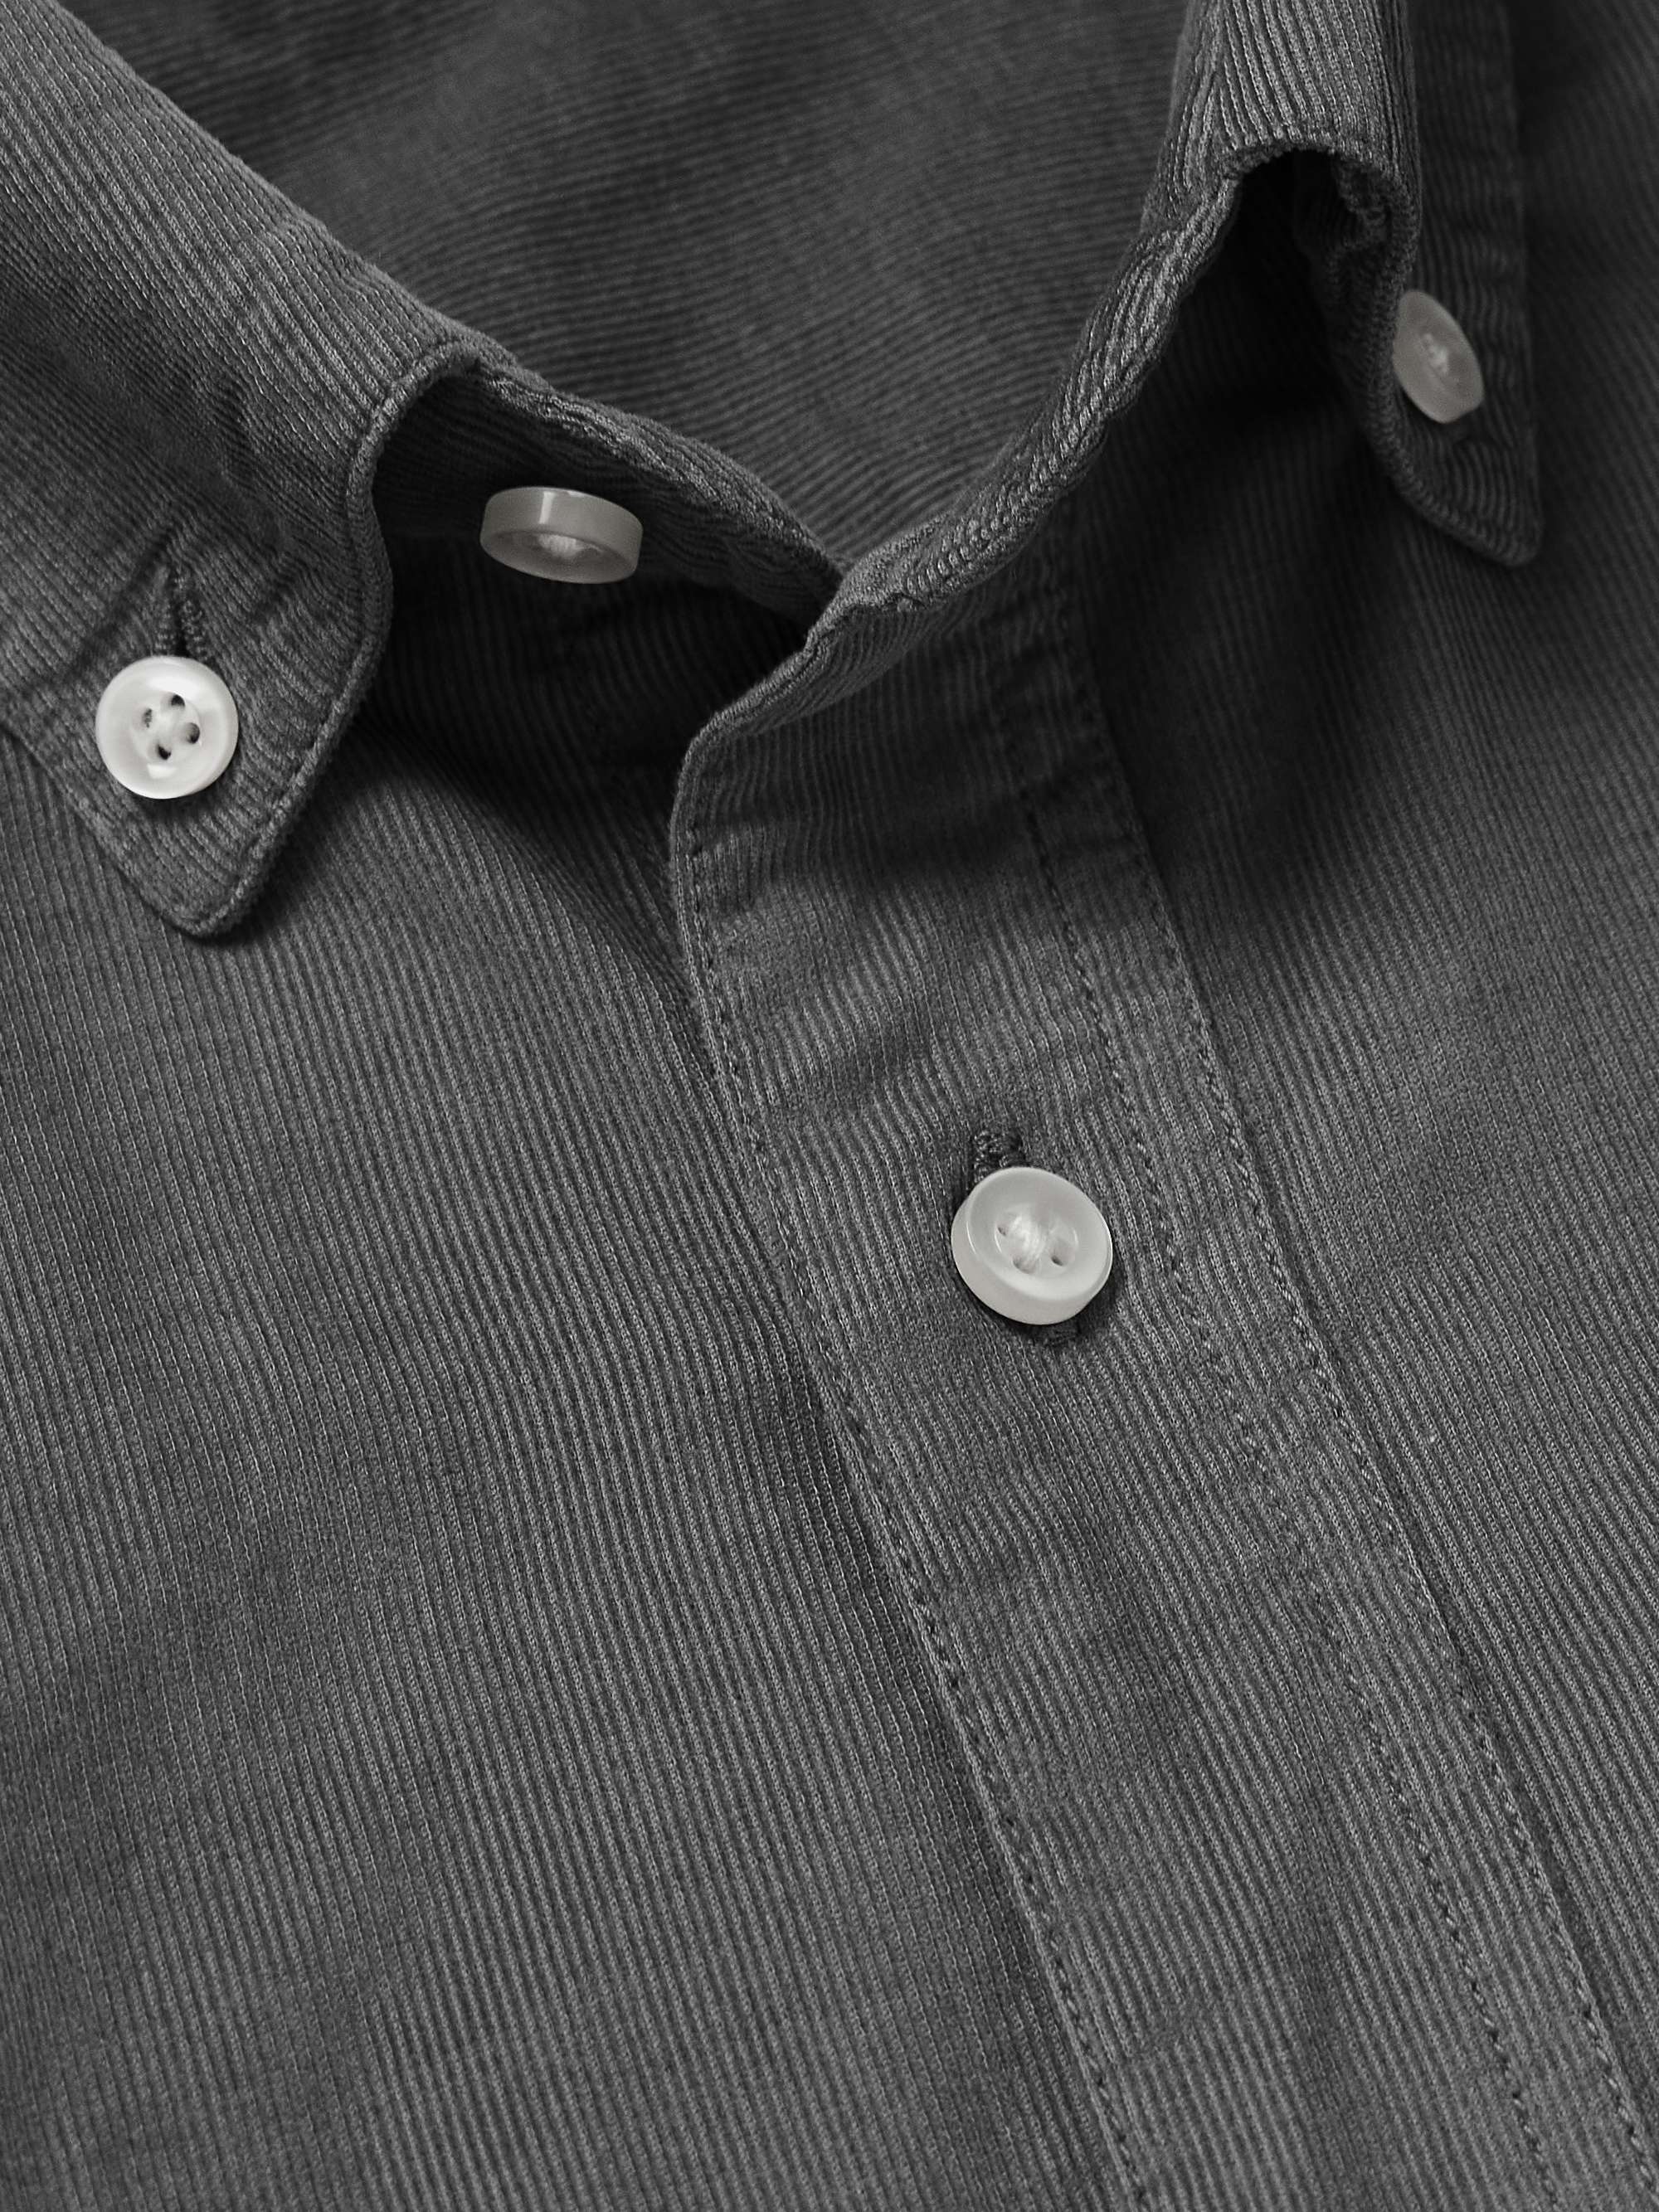 OFFICINE GÉNÉRALE Arsene Cotton-Blend Corduroy Shirt for Men | MR PORTER